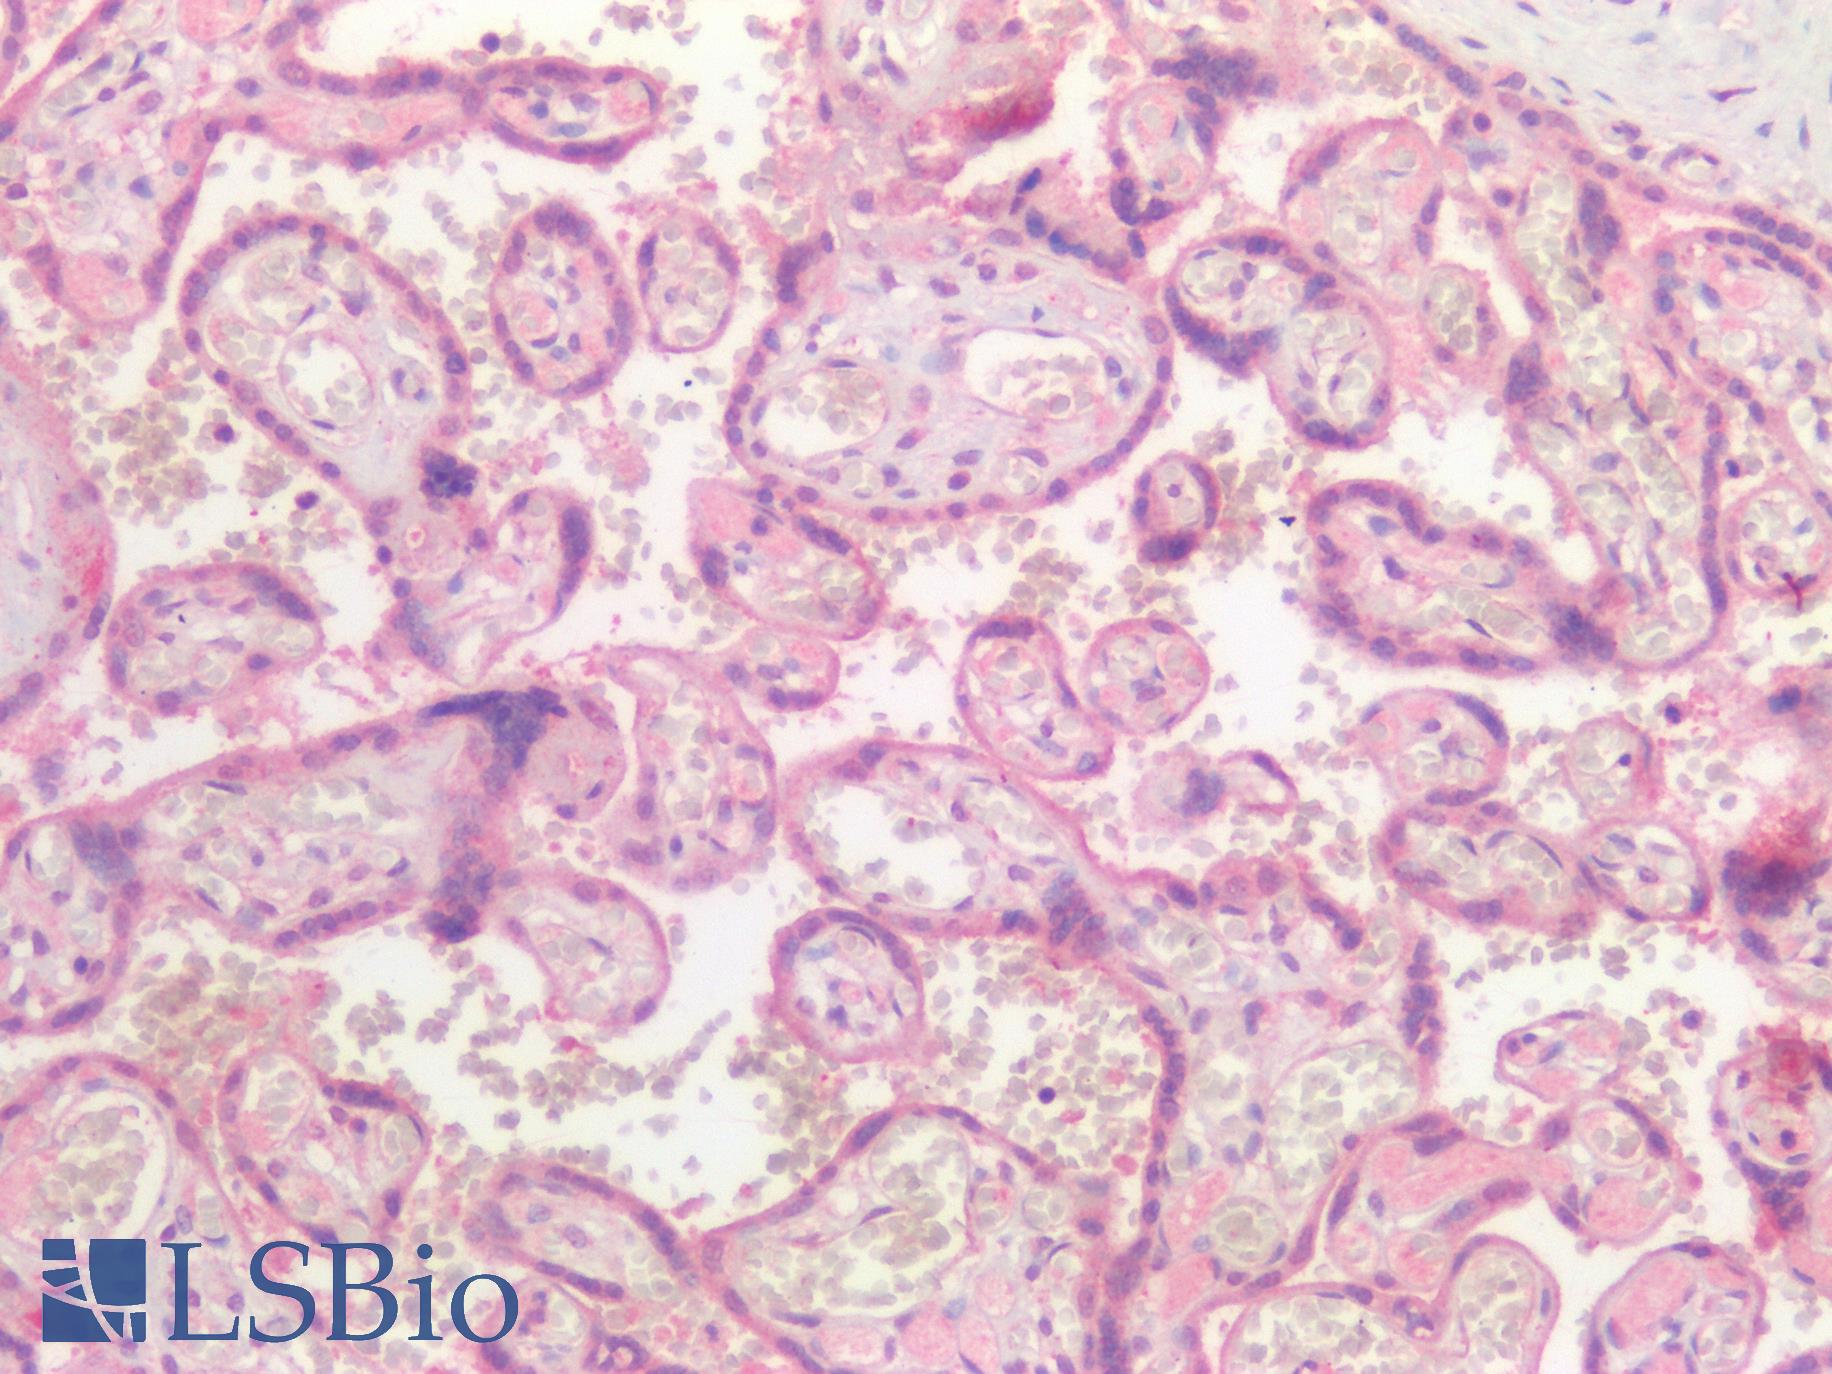 TNFRSF1B / TNFR2 Antibody - Human Placenta: Formalin-Fixed, Paraffin-Embedded (FFPE)